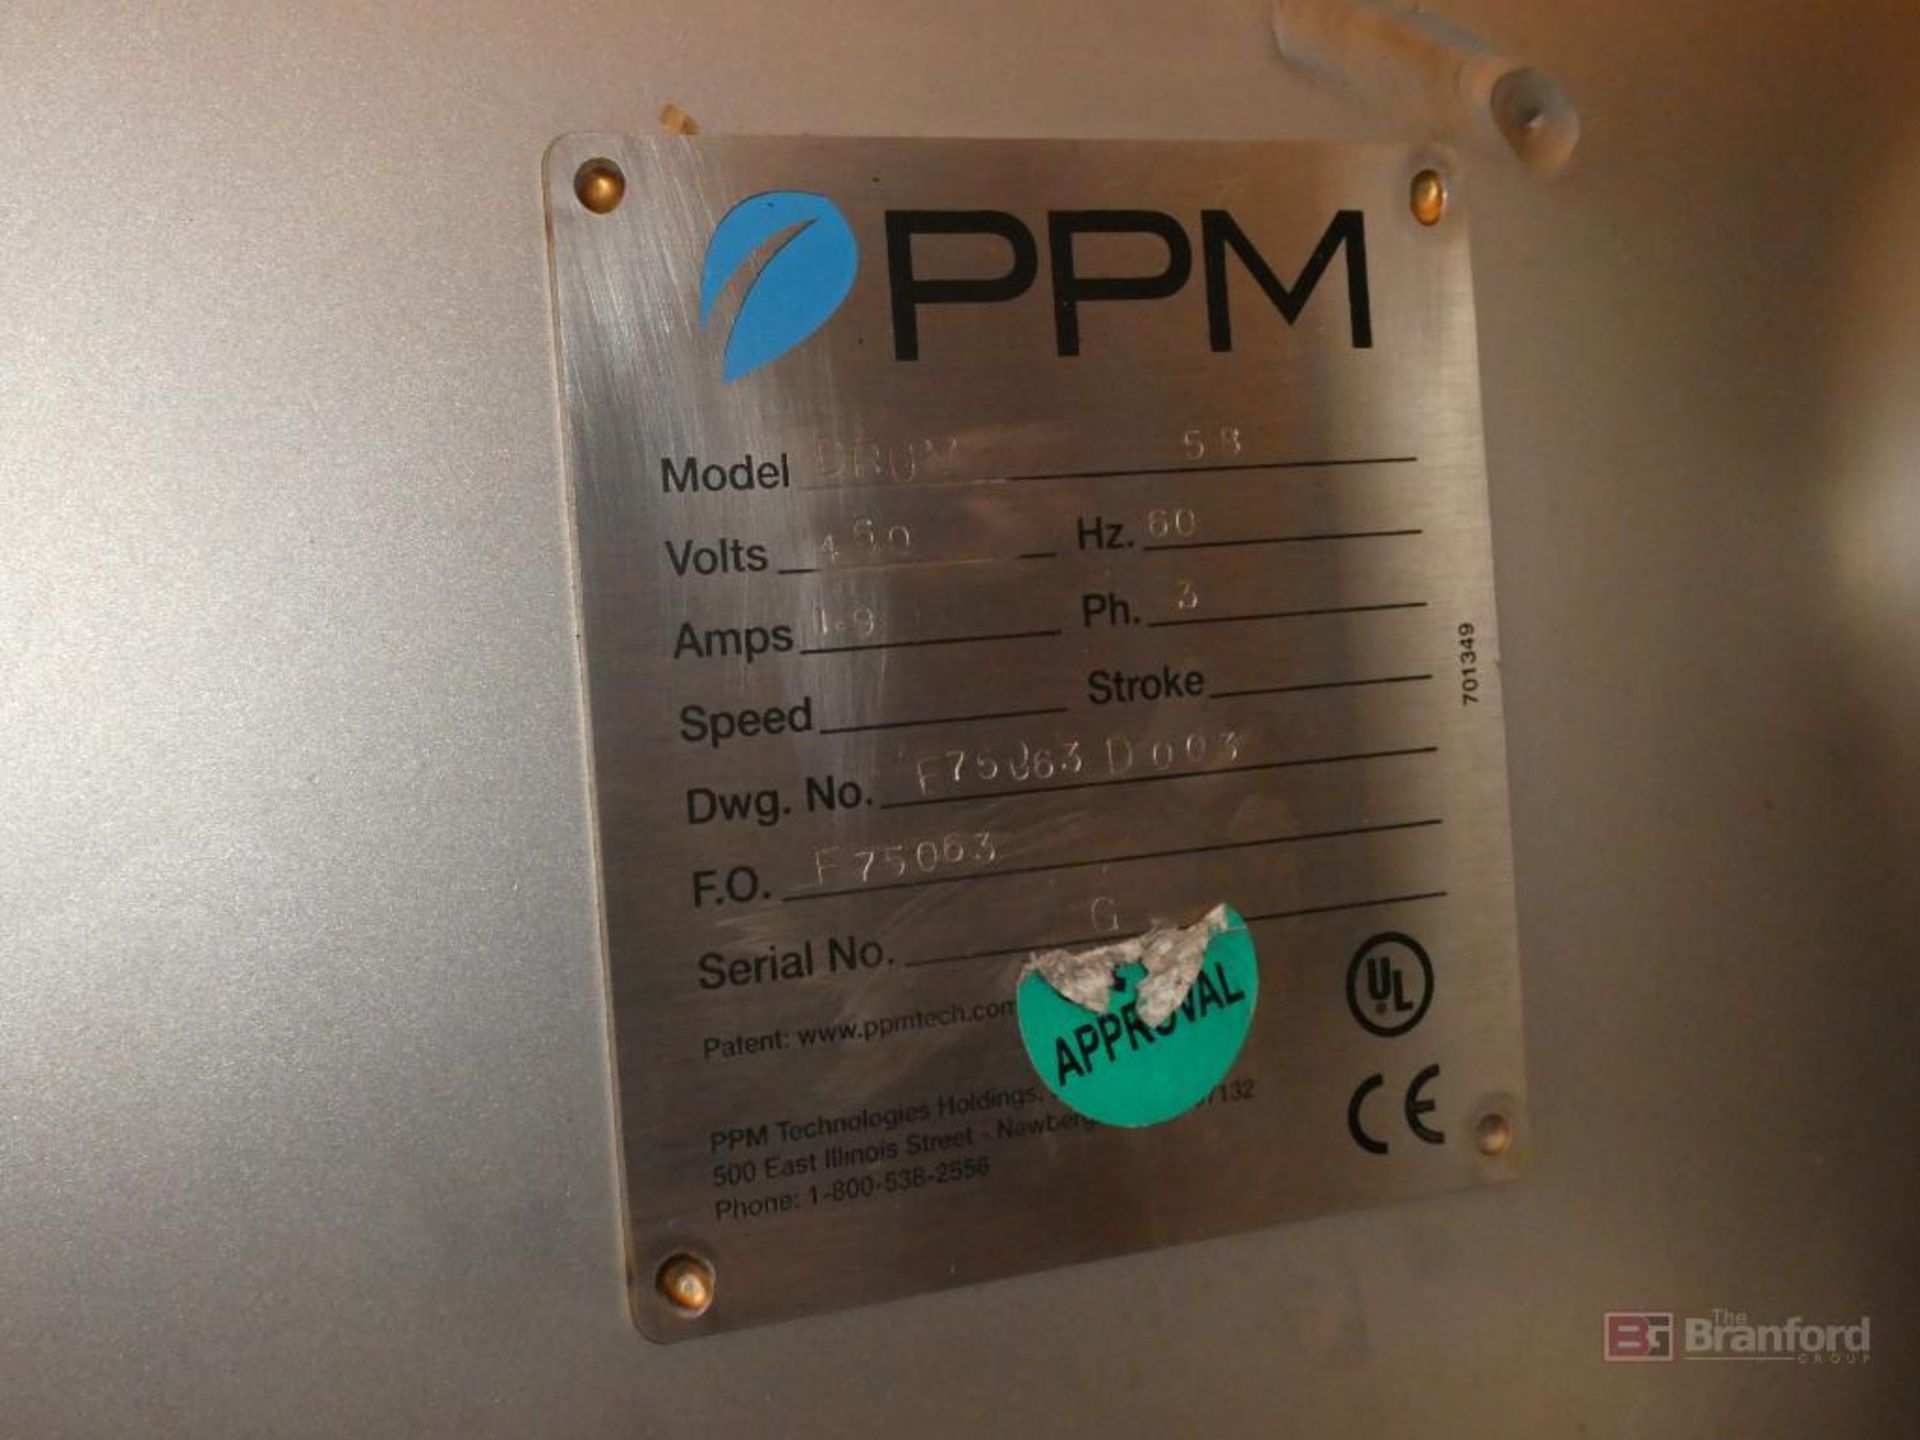 PPM Model DRUM58, Seasoning Drum Tumbler - Image 5 of 5